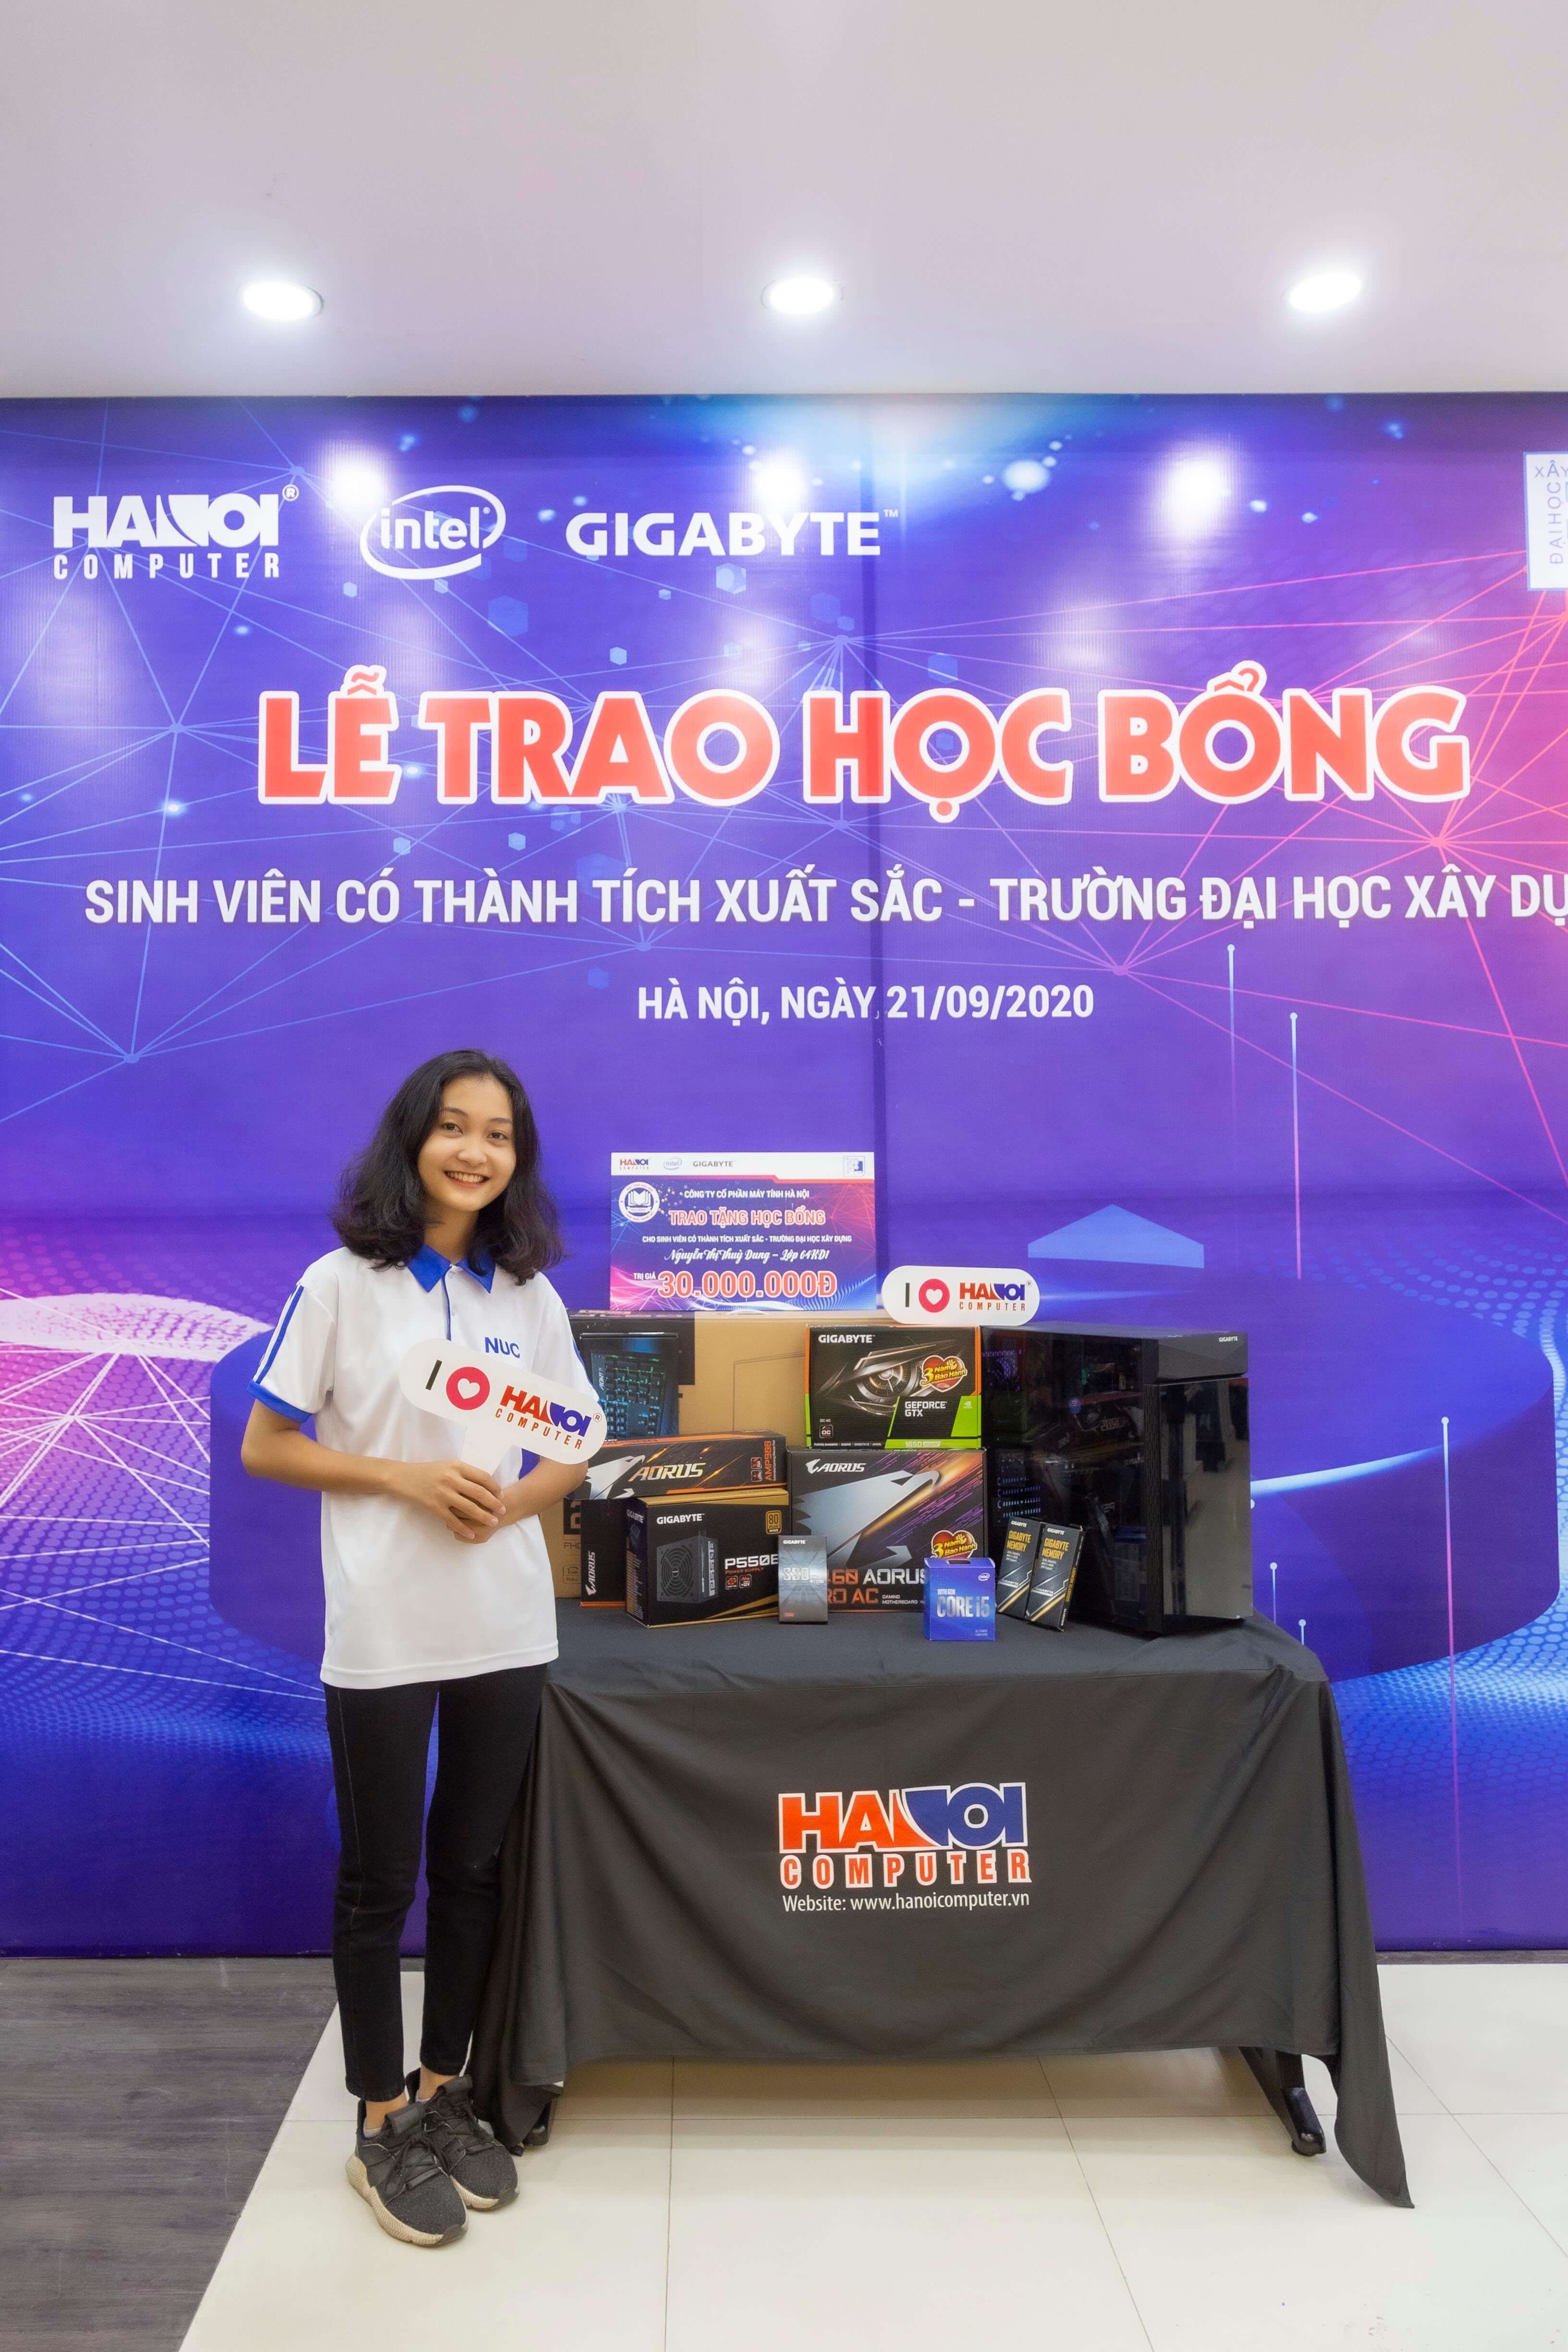 Hacom-hanoicomputer-cung-voi-hang-intel-va-gigabyte-tiep-suc-chinh-phuc-uoc-mo-